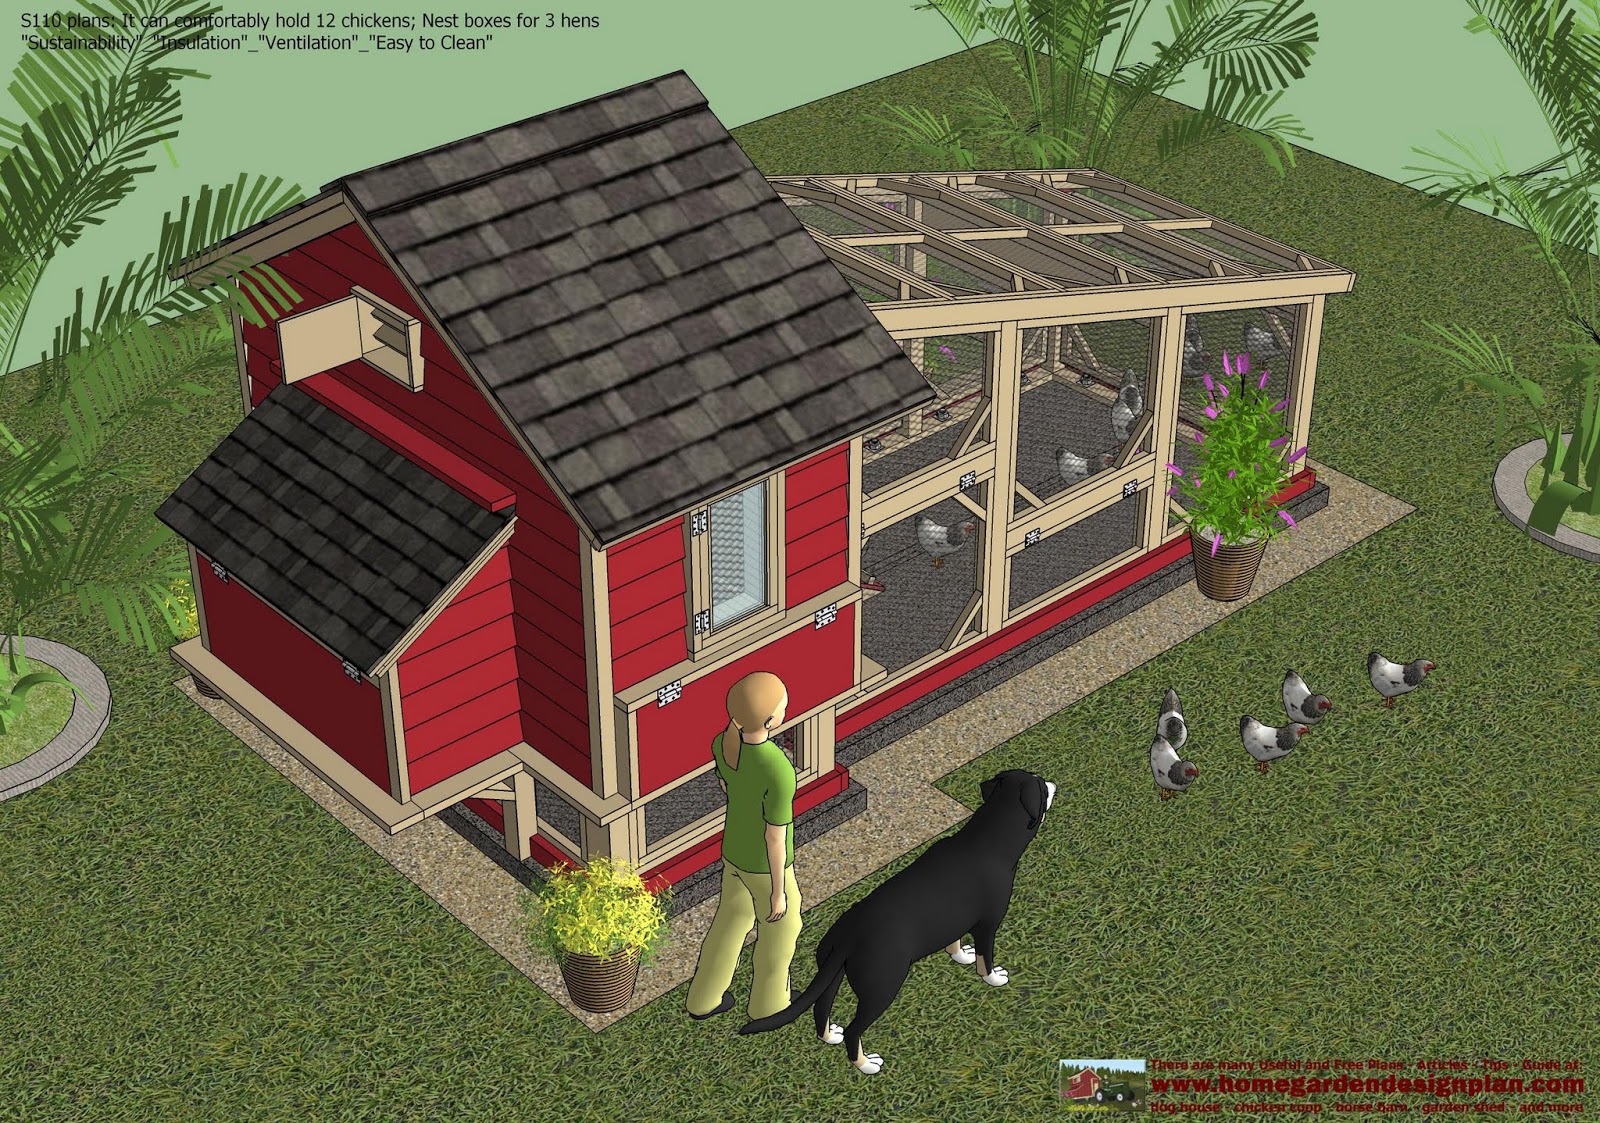 home garden plans: S110 - Chicken Coop Plans Construction ...